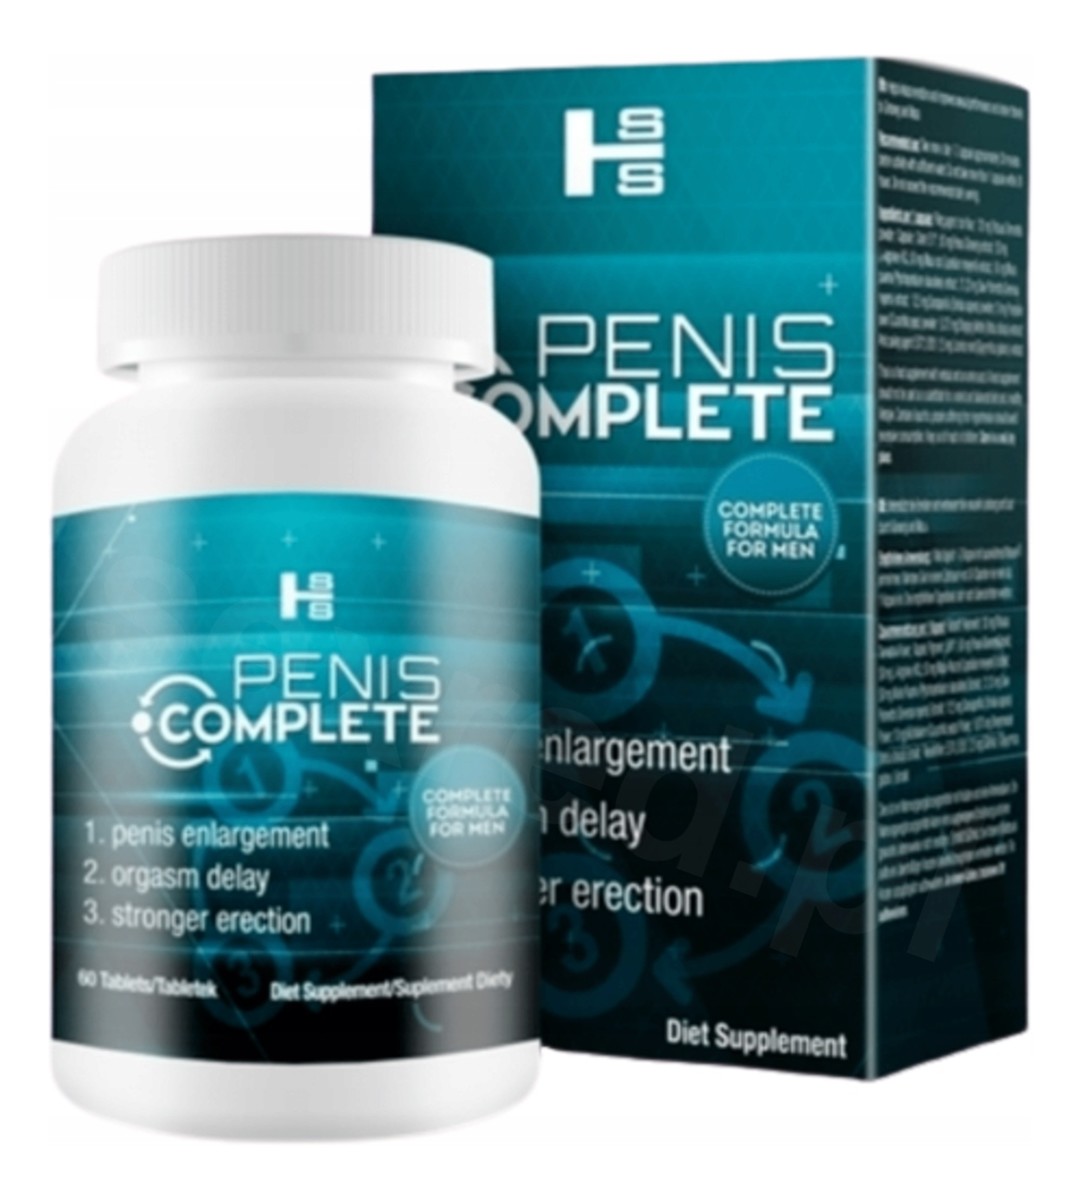 Penis complete powiększenie mocna erekcja dłuższy sex suplement diety 60 tabletek